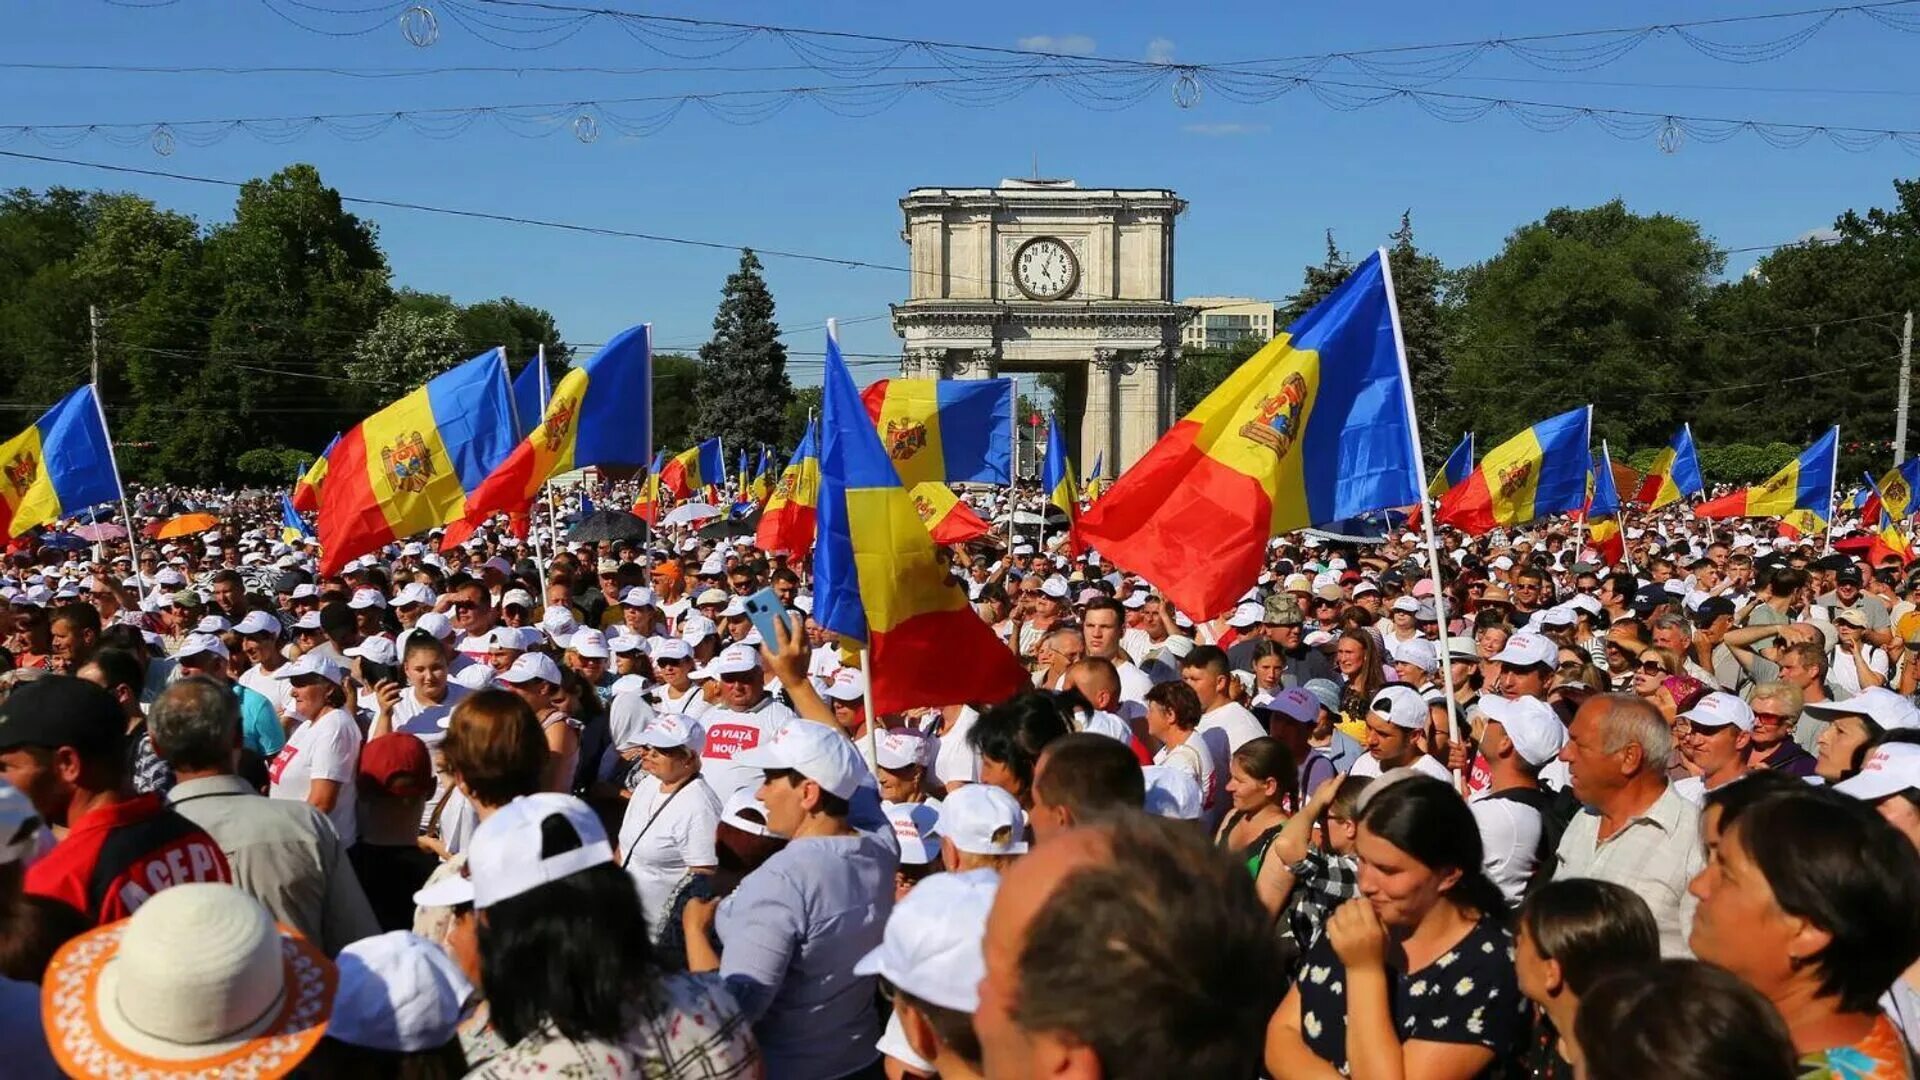 Обстановка в молдавии. Митинг в Молдове сейчас 2022. Протесты в Молдавии 2022. Протесты в Молдове против Санду. Протесты в Кишиневе 2022.